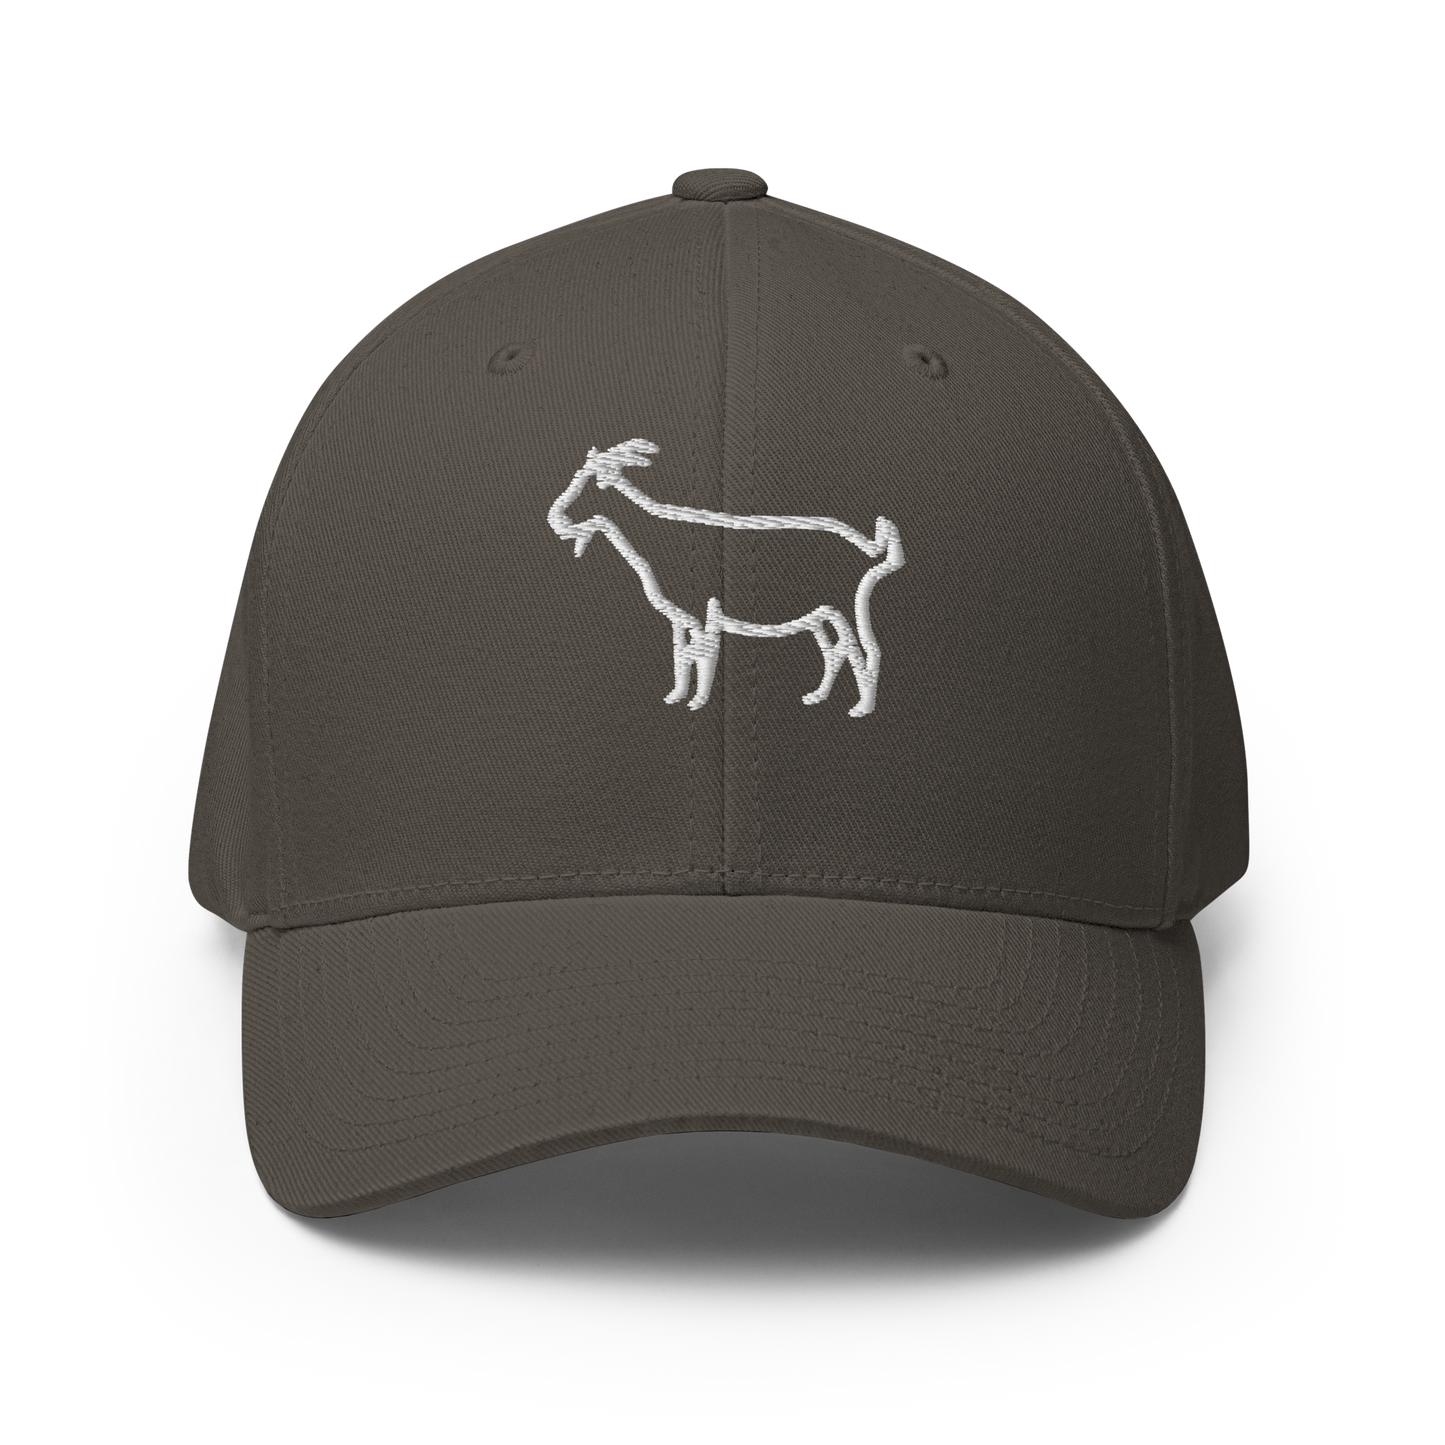 Goat FlexFit Structured Twill Cap | BMFS 33 Inspired Cap